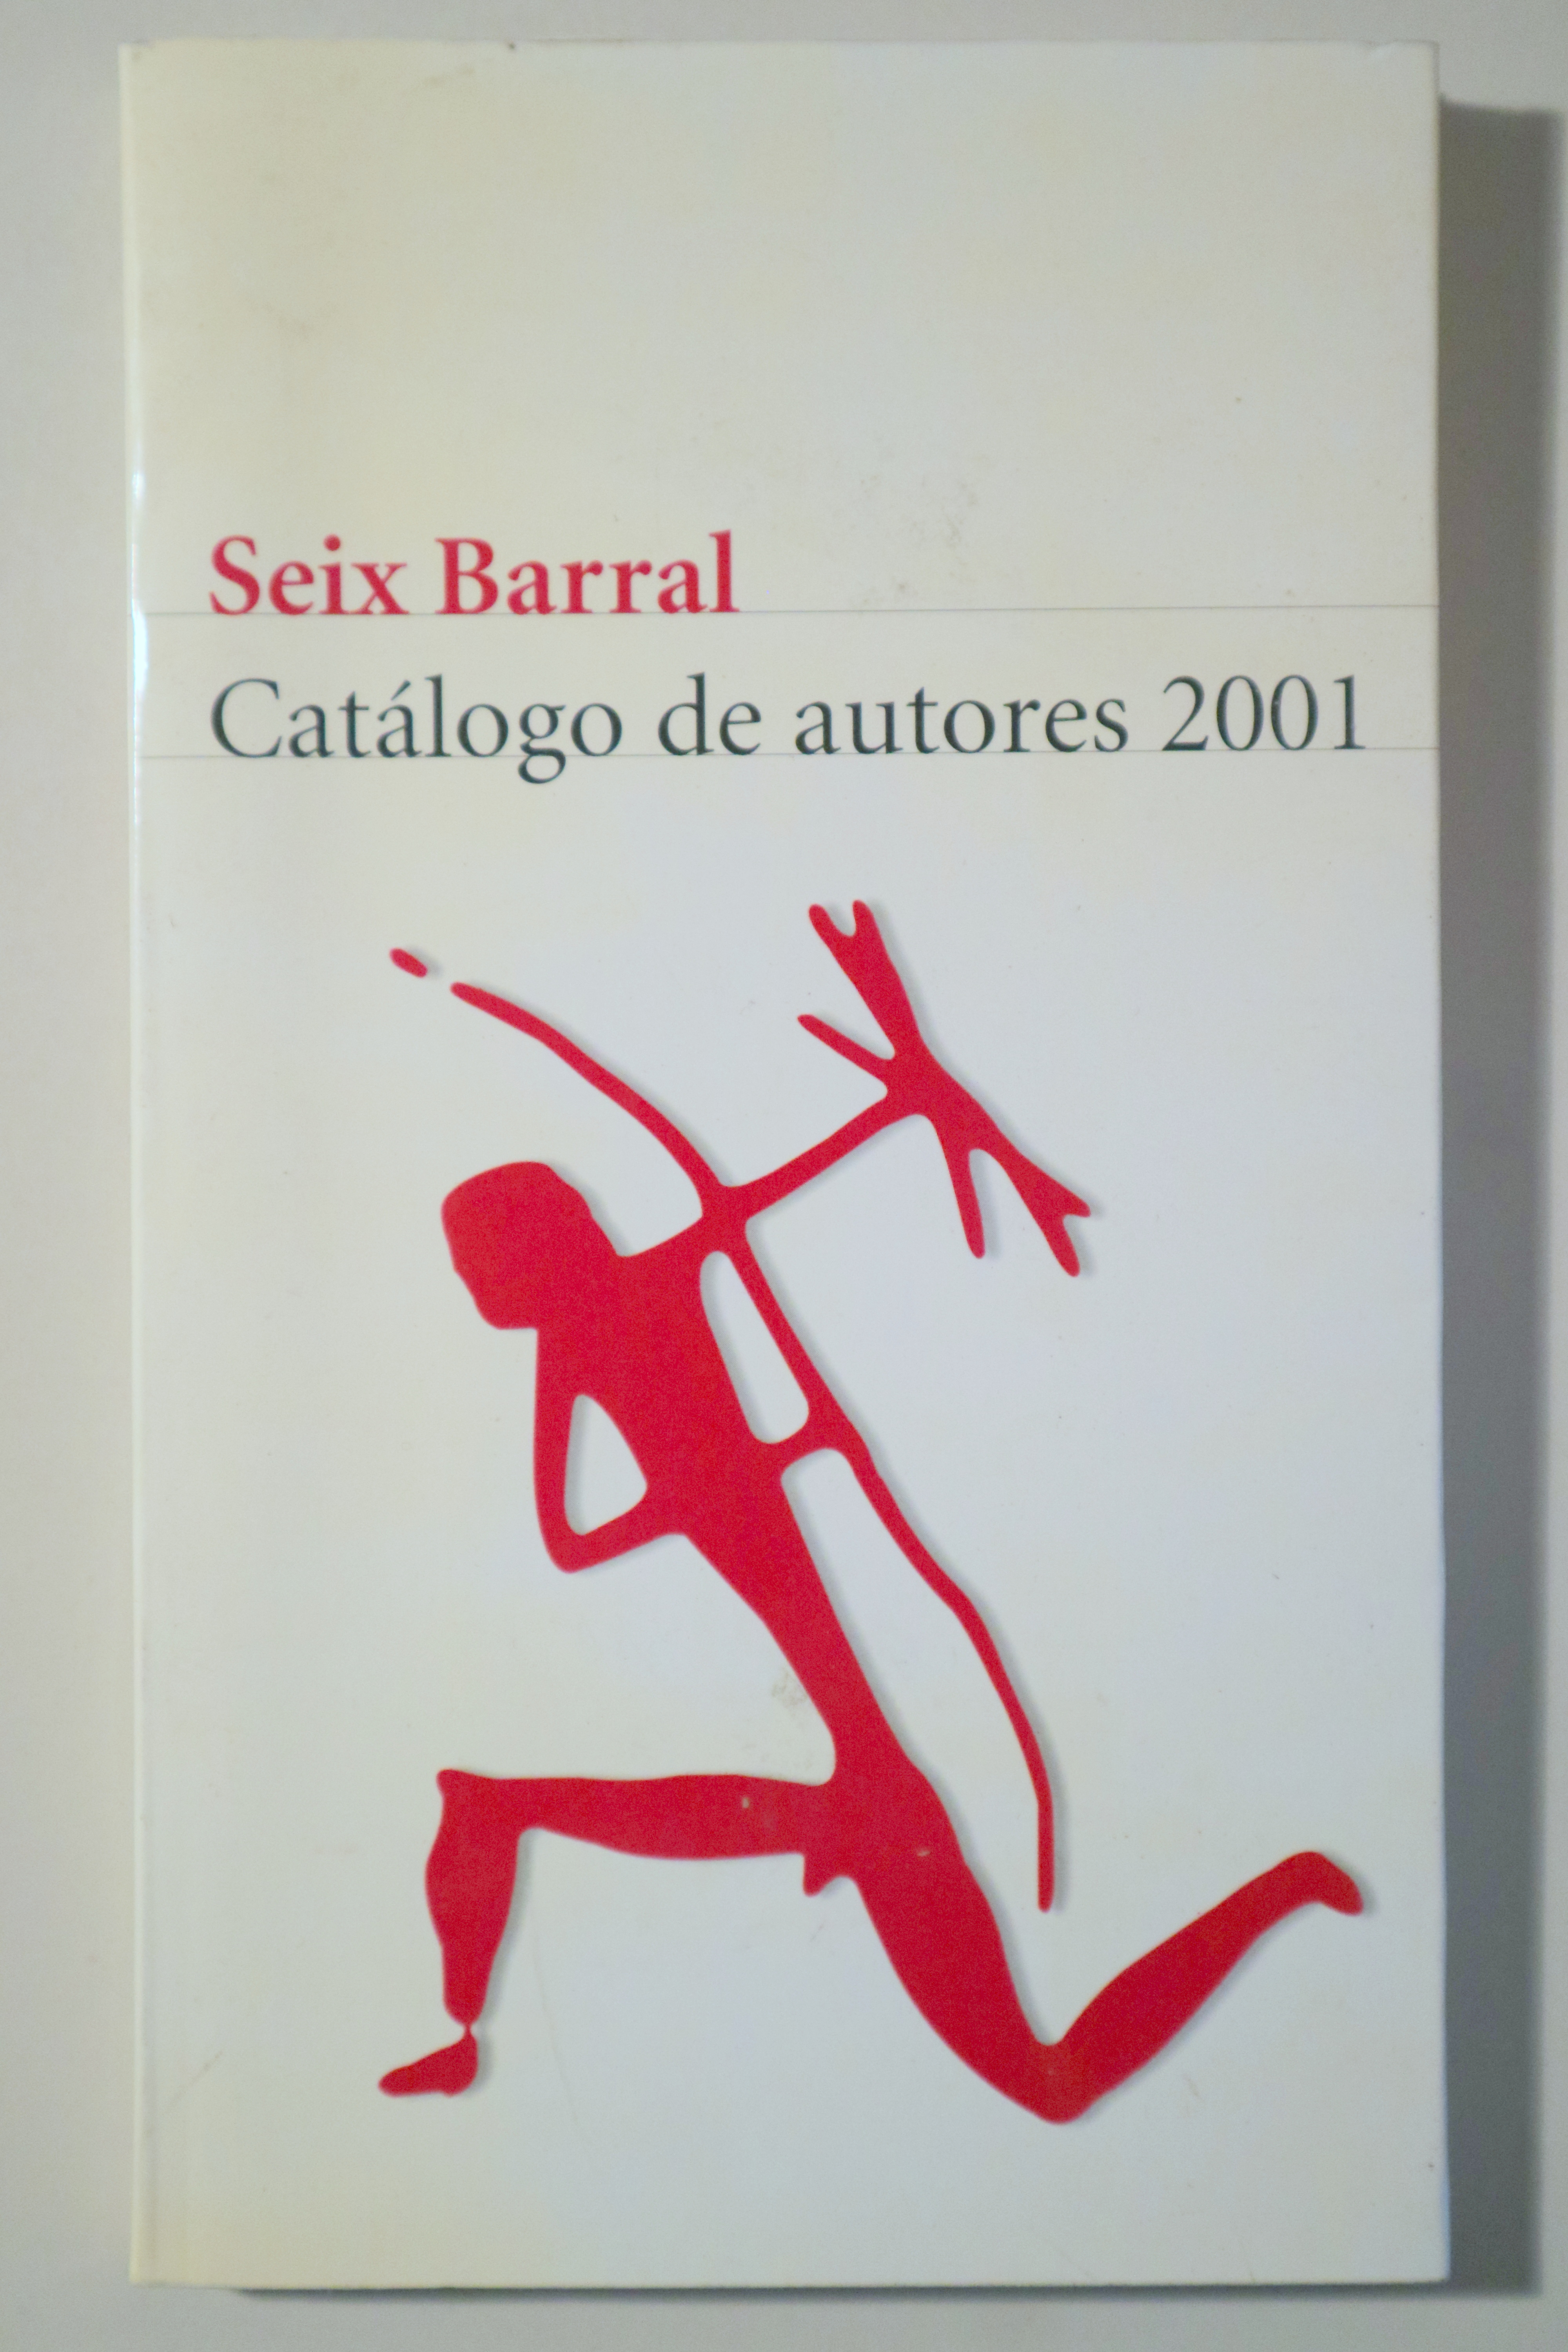 SEIX BARRAL. CATÁLOGO DE AUTORES 2001 - Barcelona 2001 - Muy ilustrado